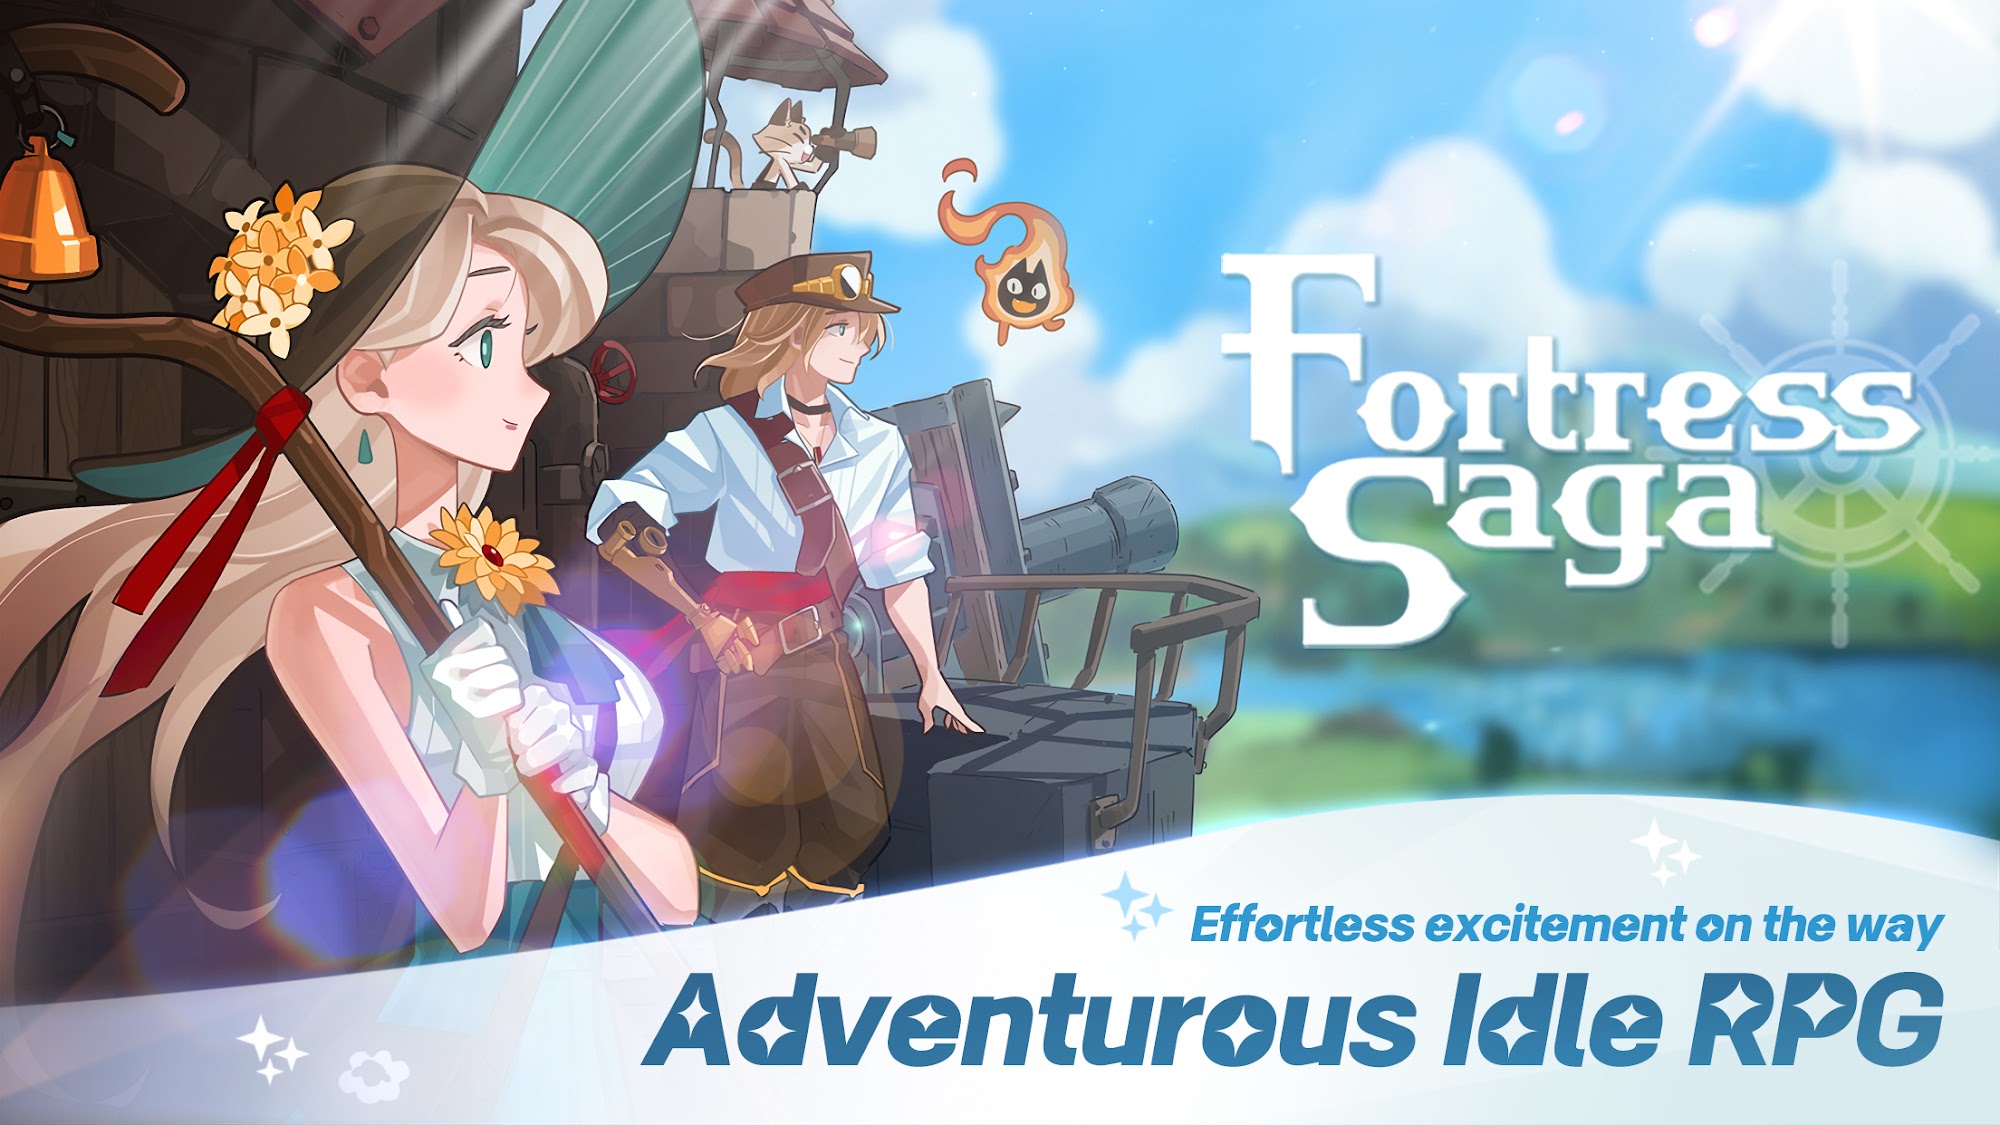 Download Fortress Saga: AFK RPG Android free game.